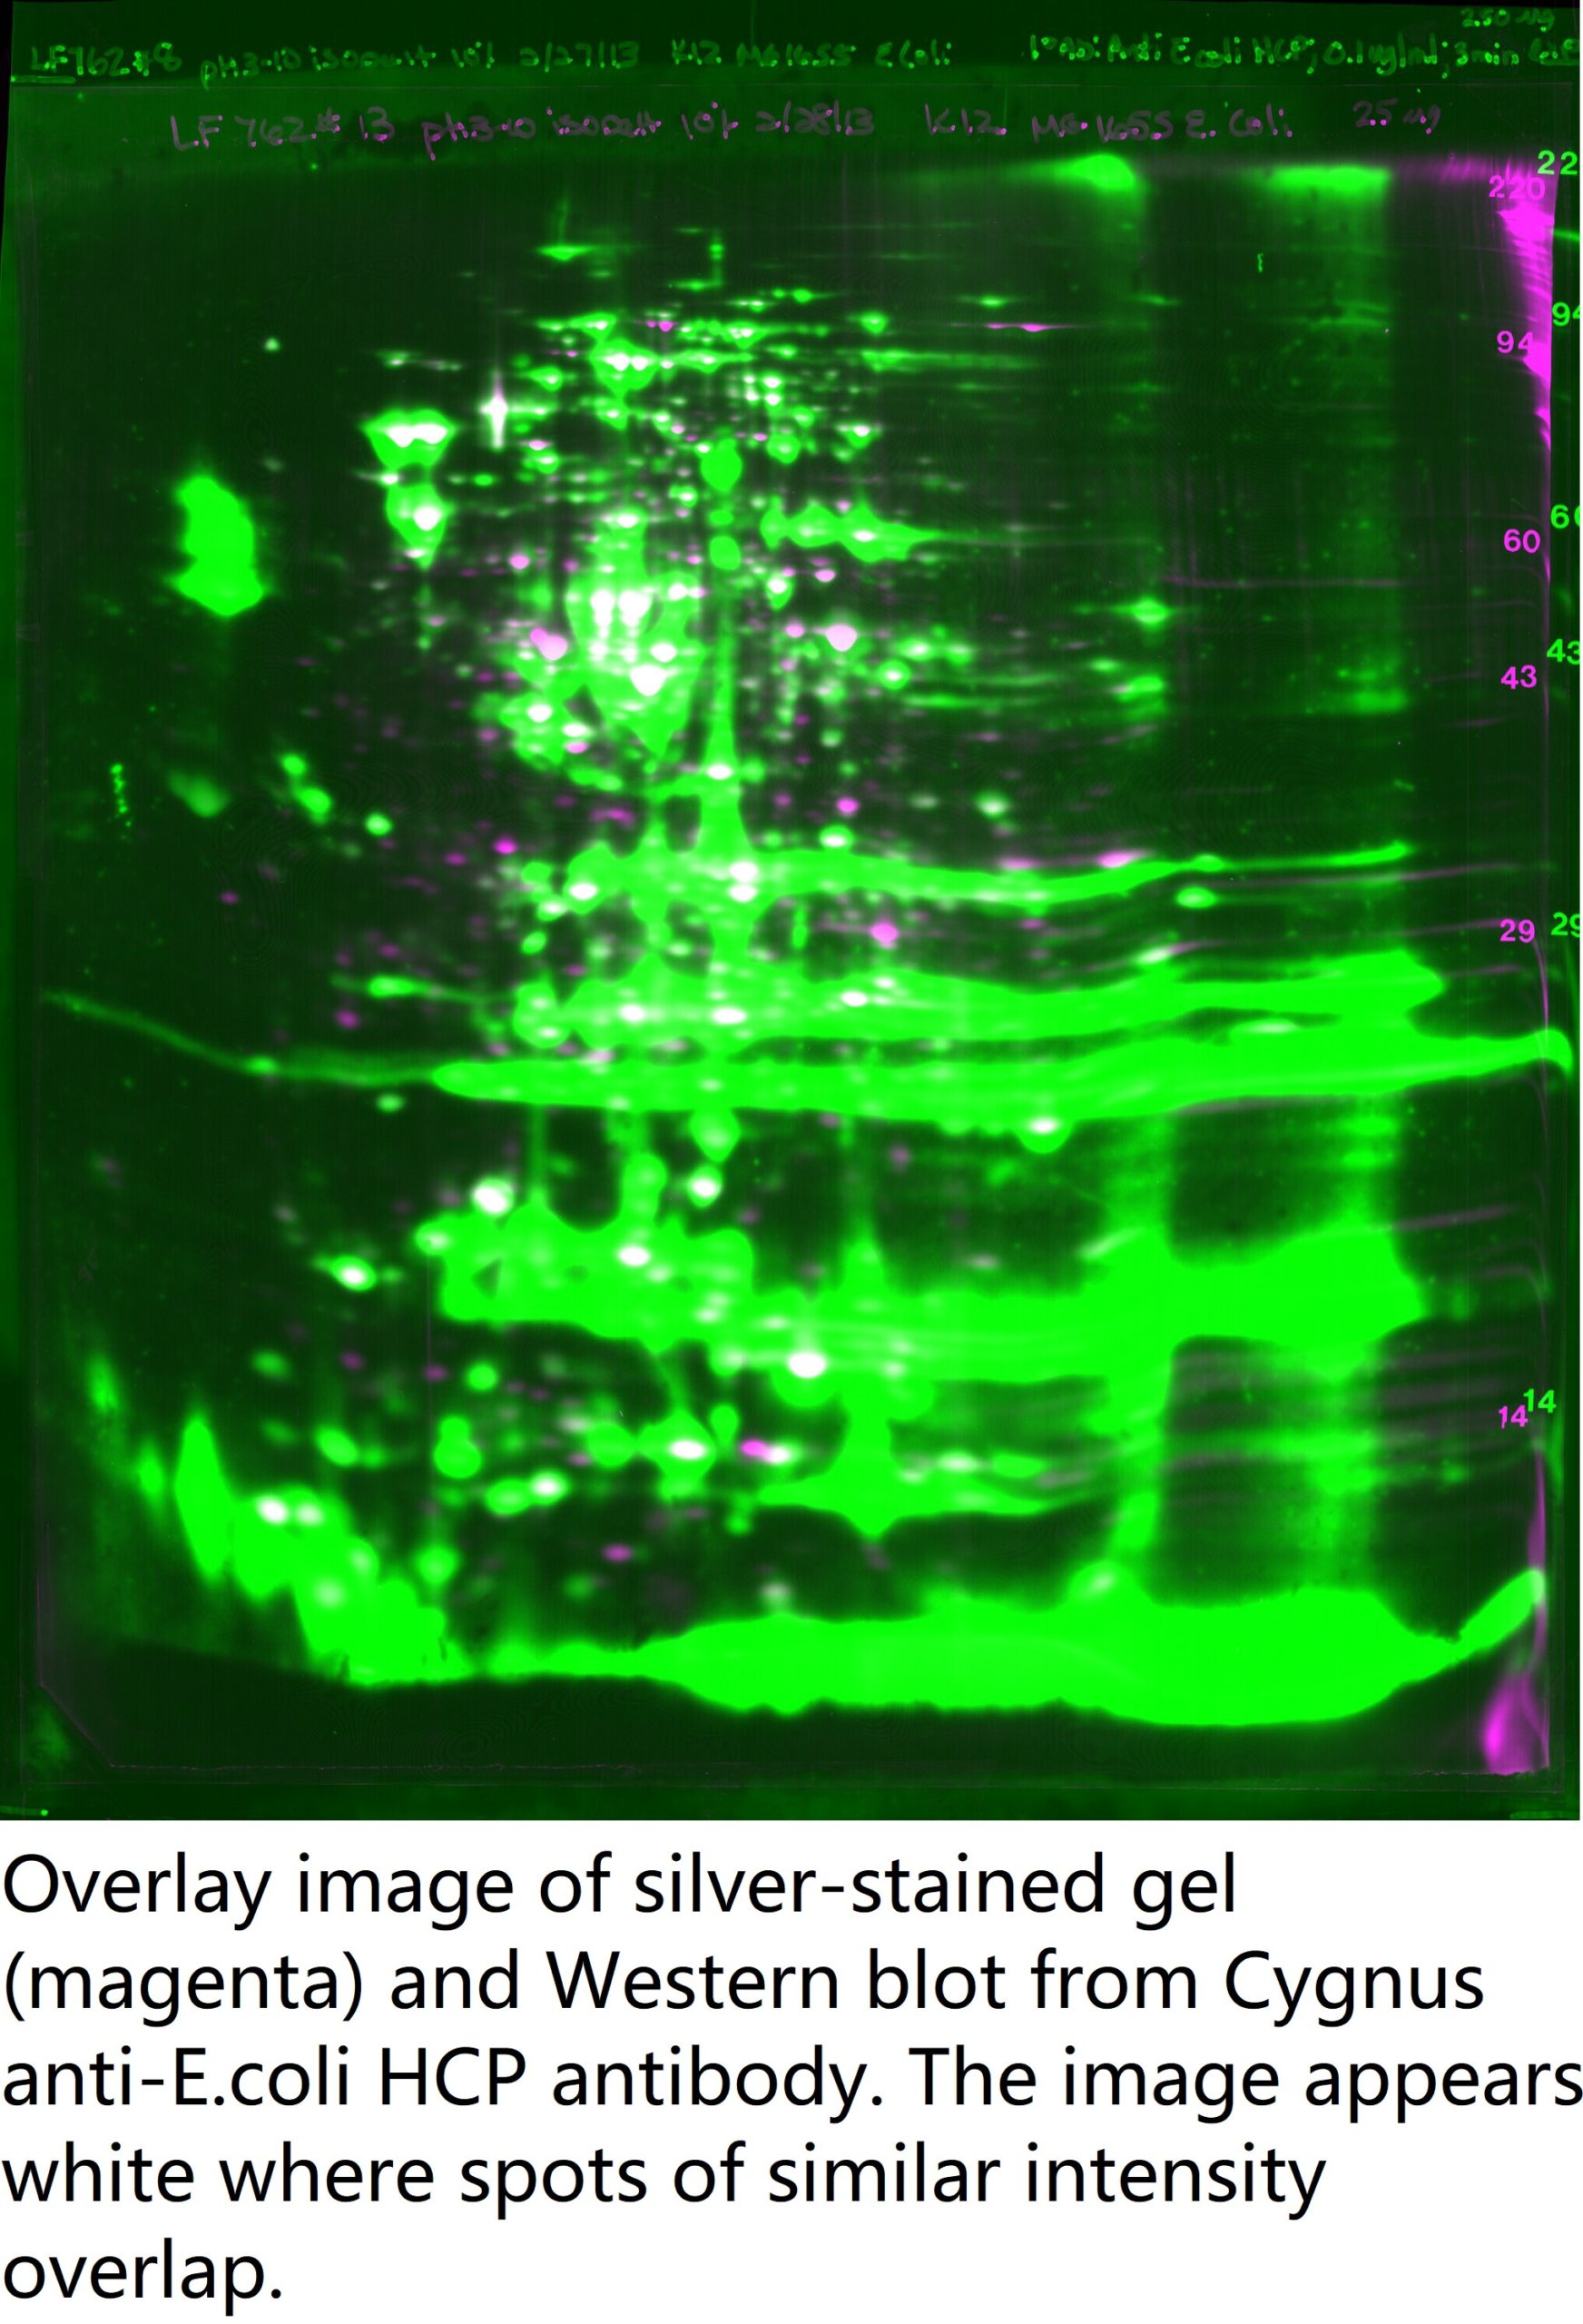 Overlay image 2D gel (magenta) and Western blot anti-HCP antibody (green). White shows spot overlap